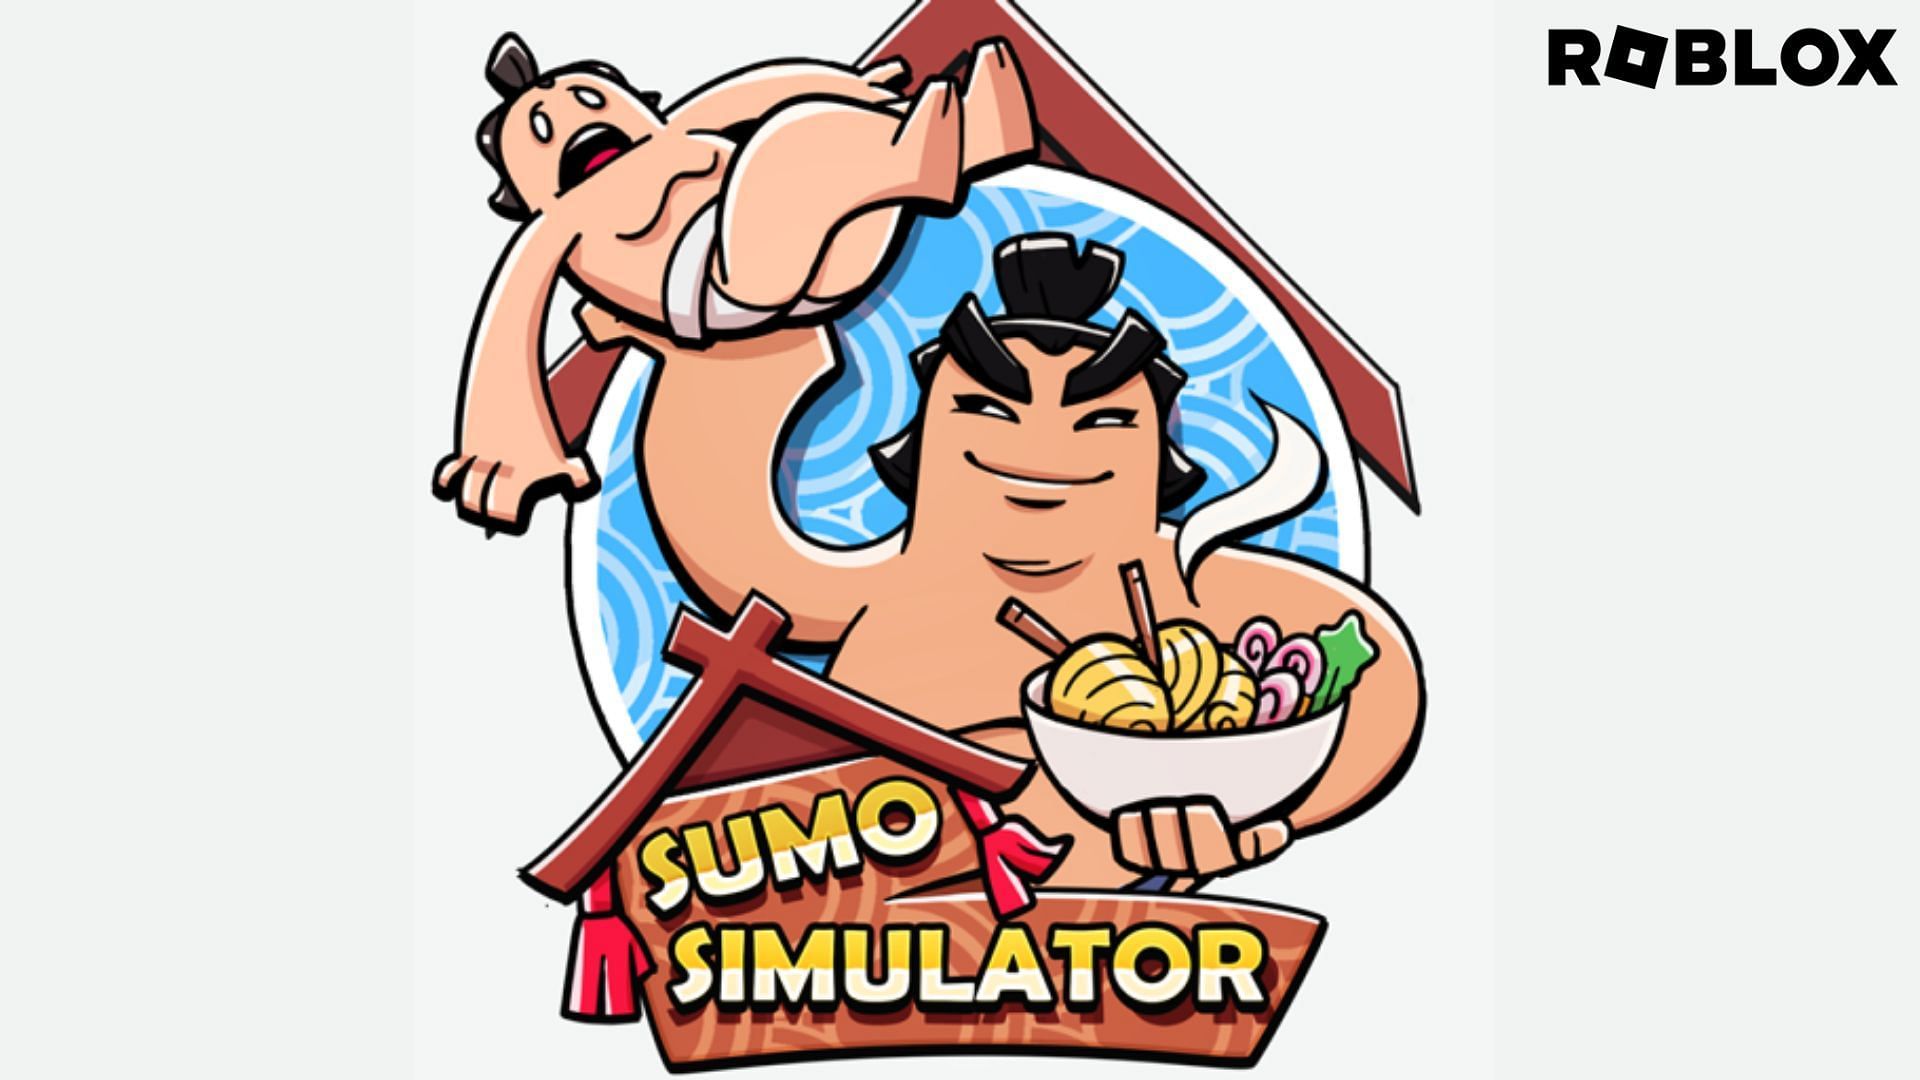 Featured image of Sumo Simulator (Image via Roblox and Sportskeeda)